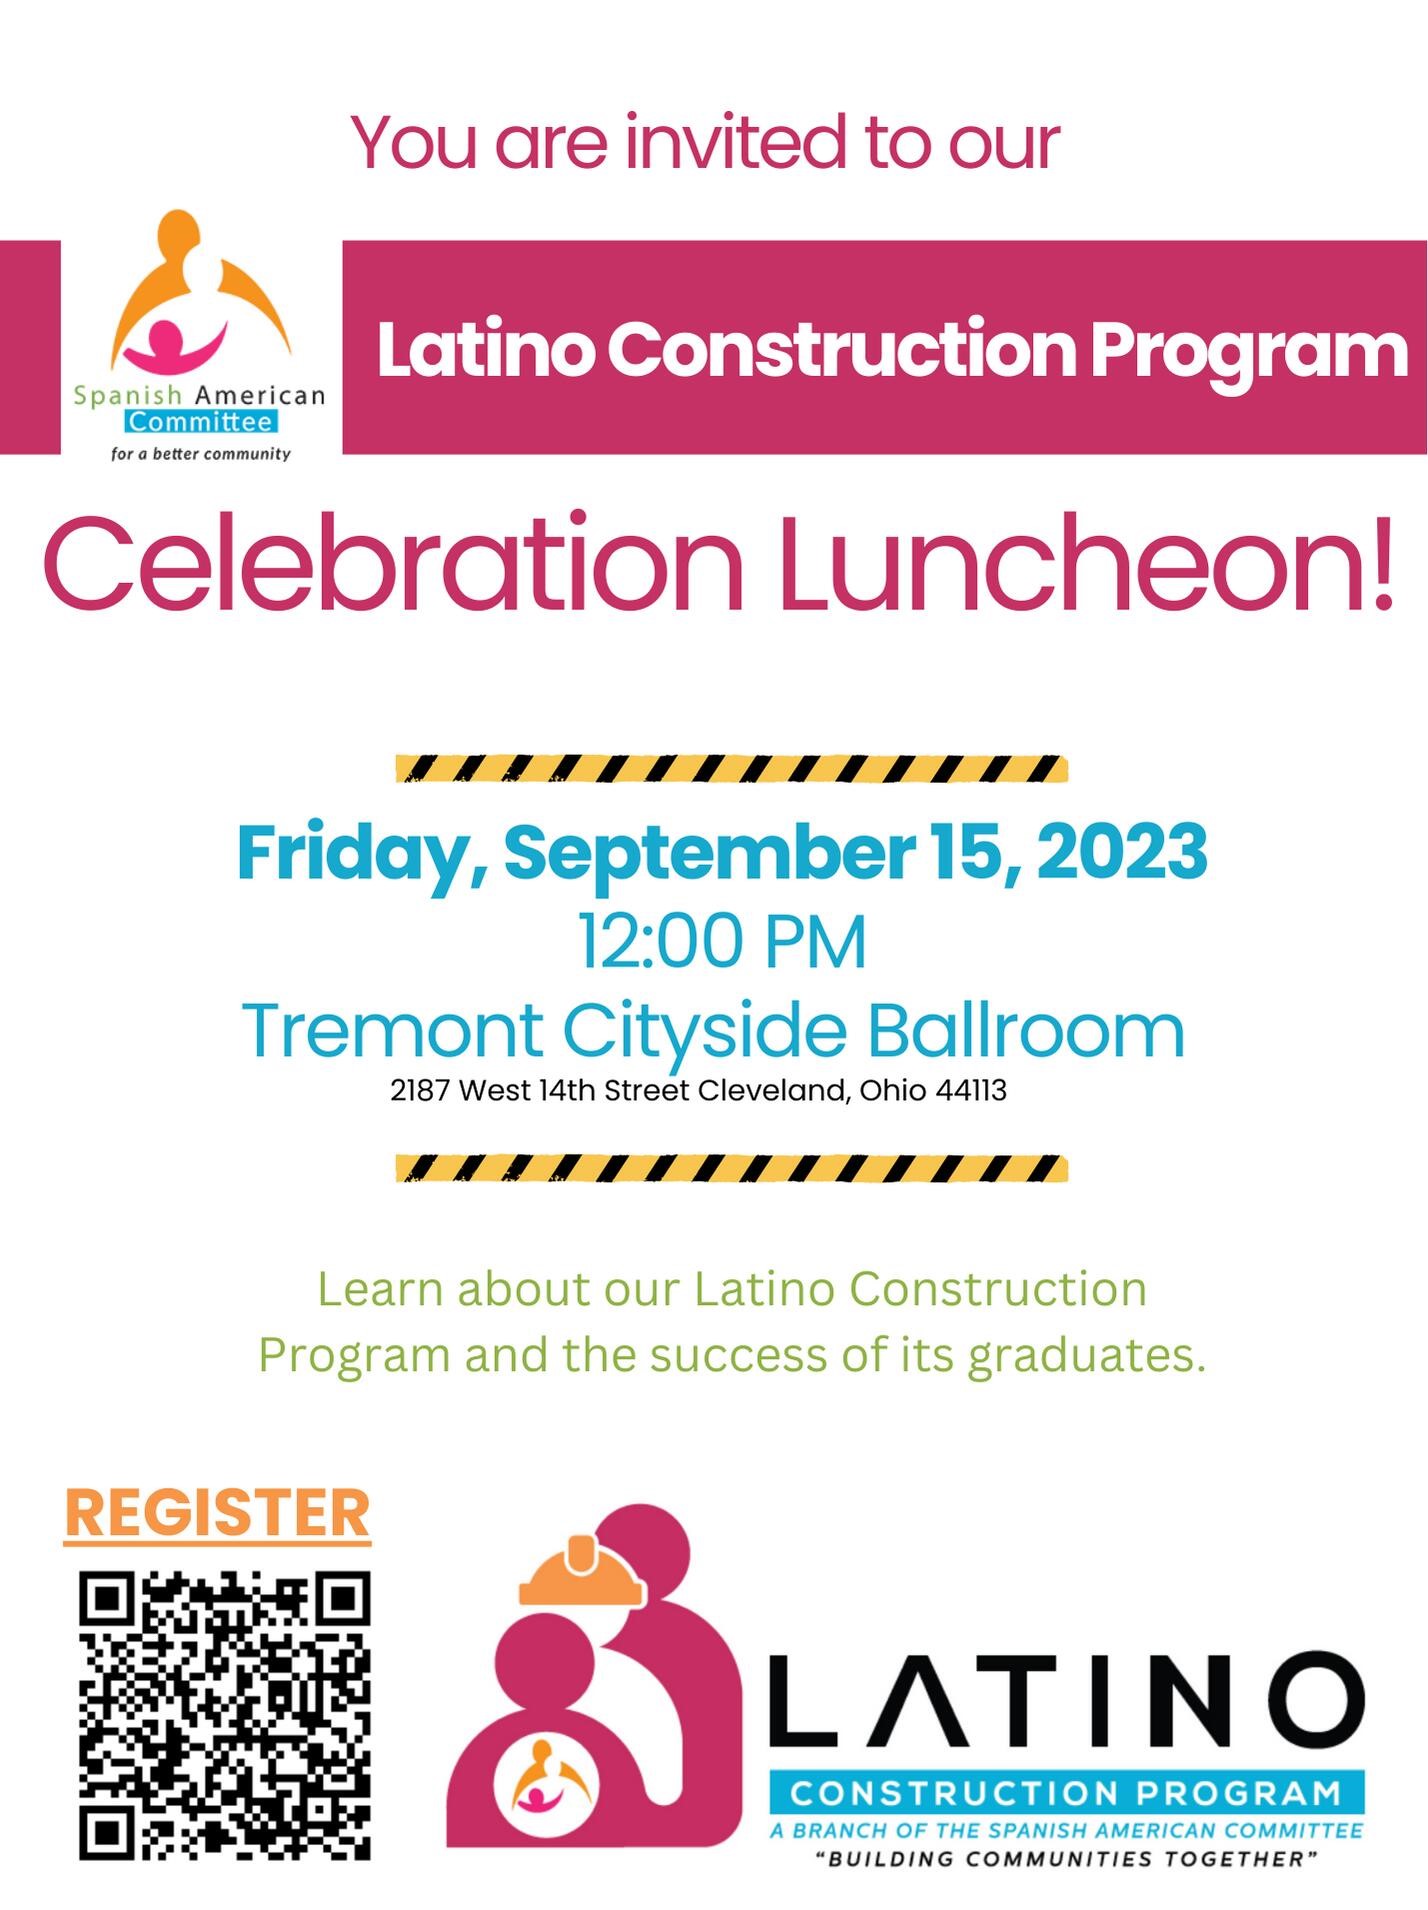 Invitation to Latino Construction Program Luncheon celebration on September 15th, 2023